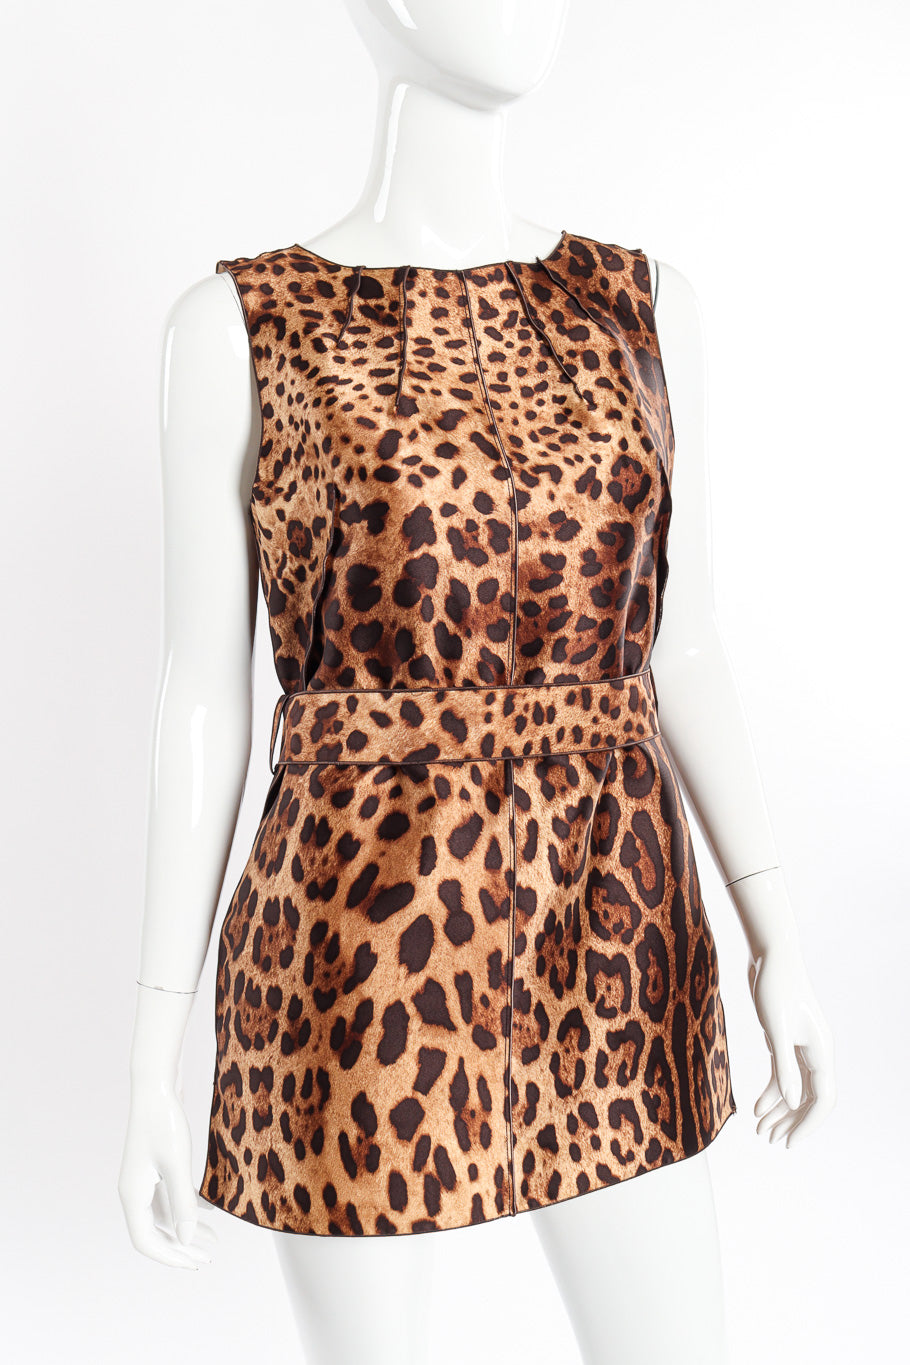 Dolce & Gabbana Belted Leopard Mini Dress front view closeup @recessla